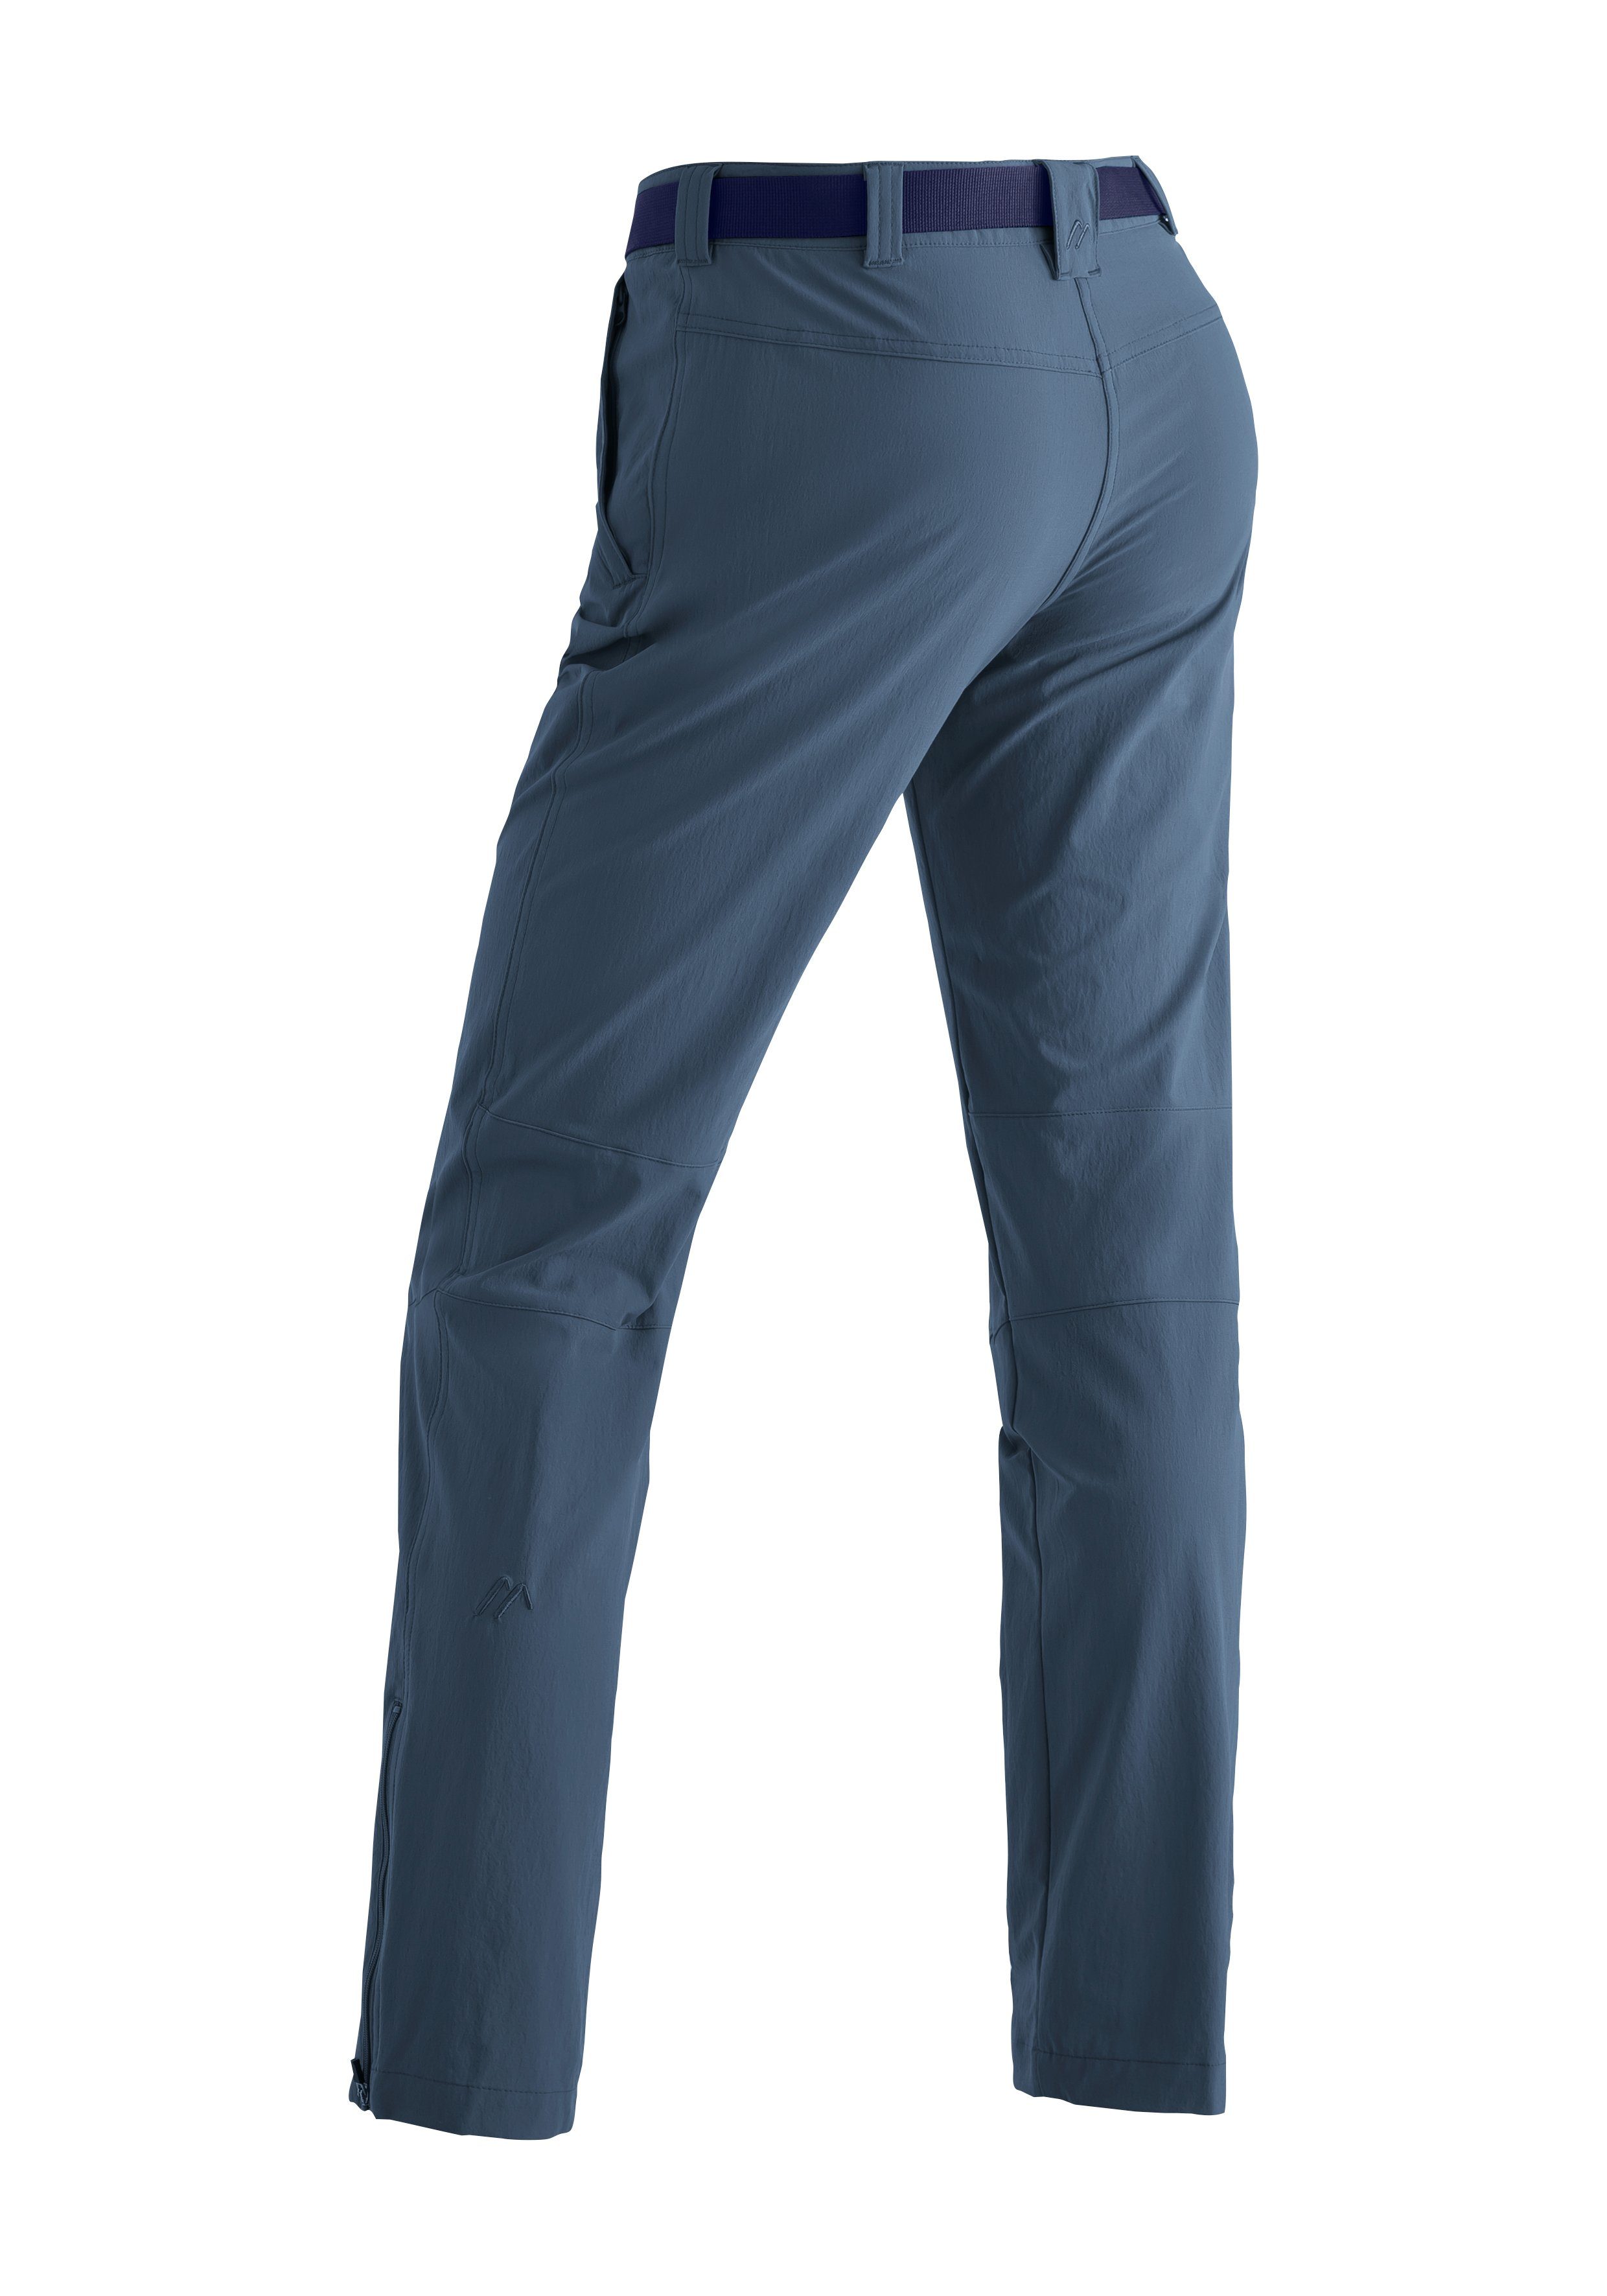 Funktionshose slim Wanderhose, Material Inara Outdoor-Hose Damen aus elastischem Maier Sports jeansblau